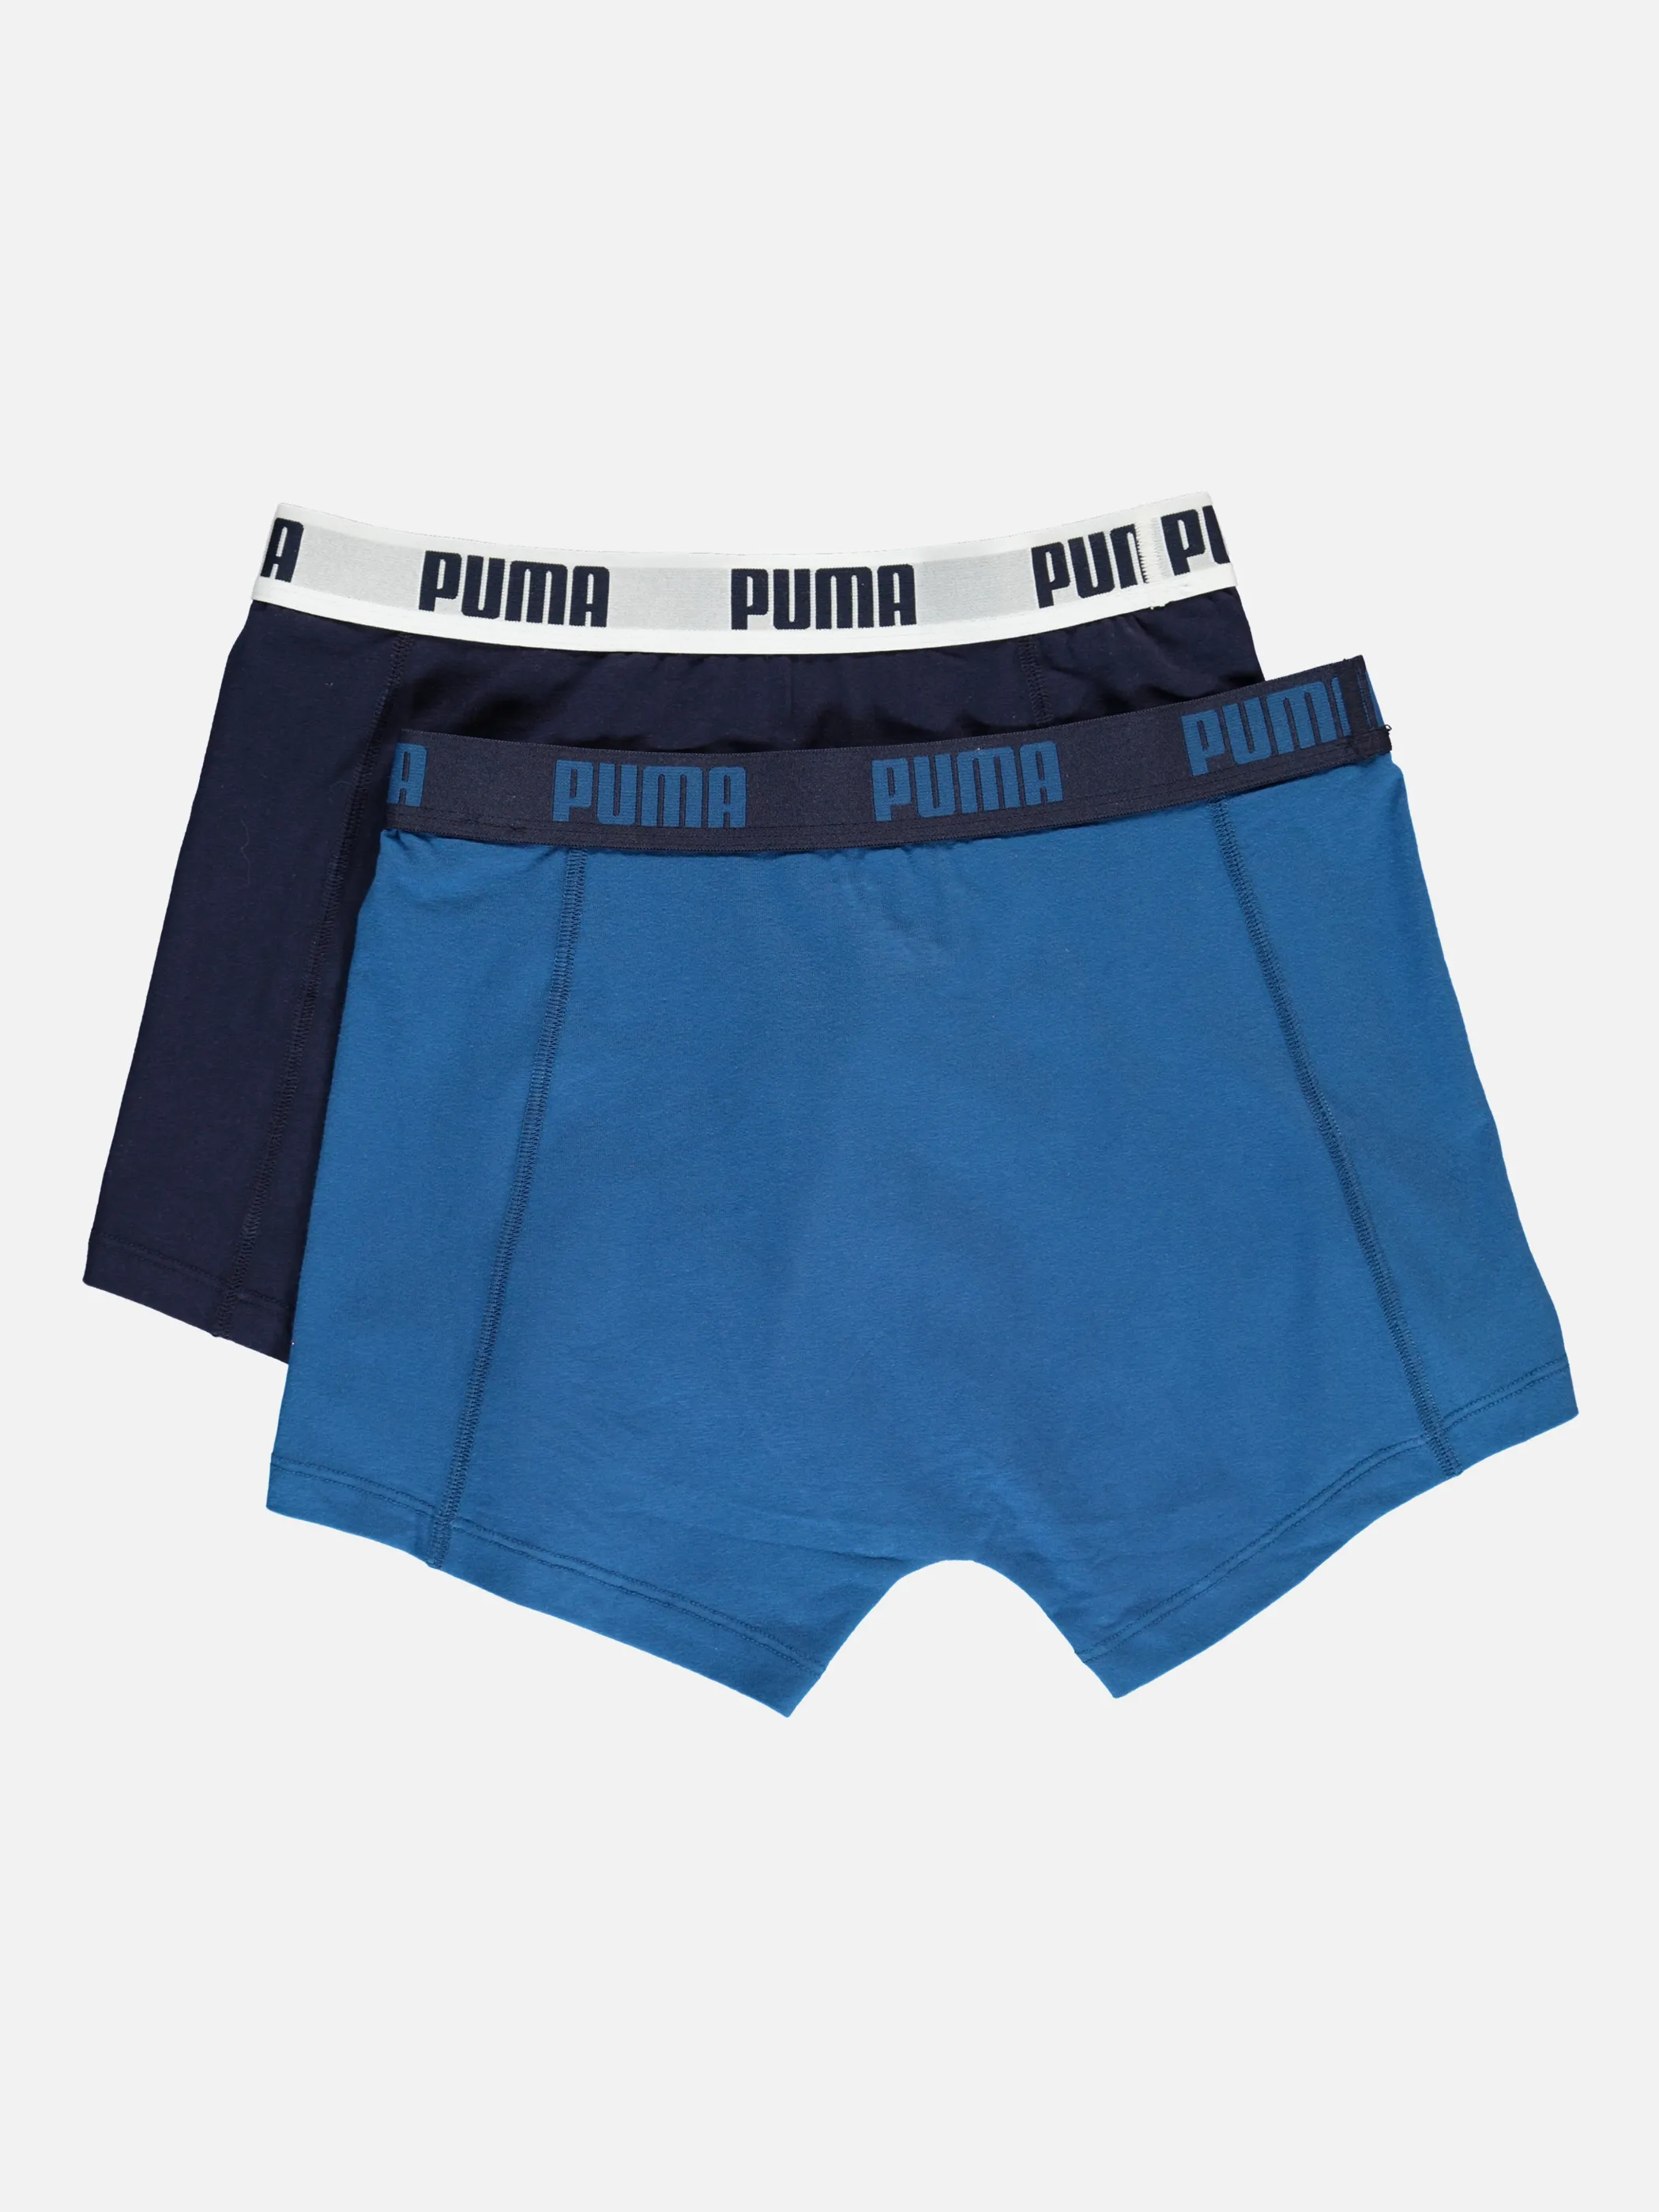 Puma Puma Basic Boxer 2er Pack Blau 762020 TRUE BLUE 2